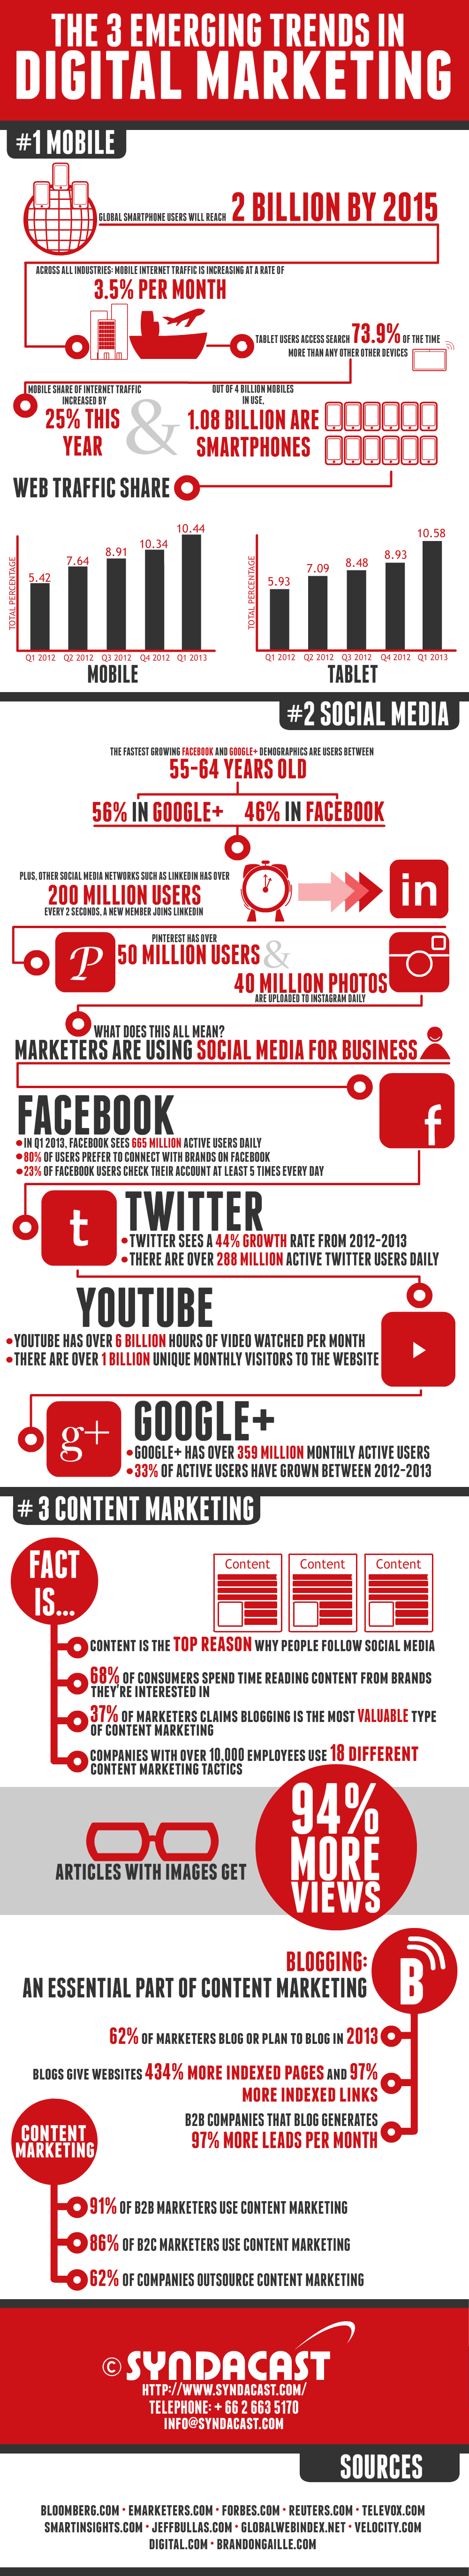 Top 3 Digital Marketing Emerging Trends